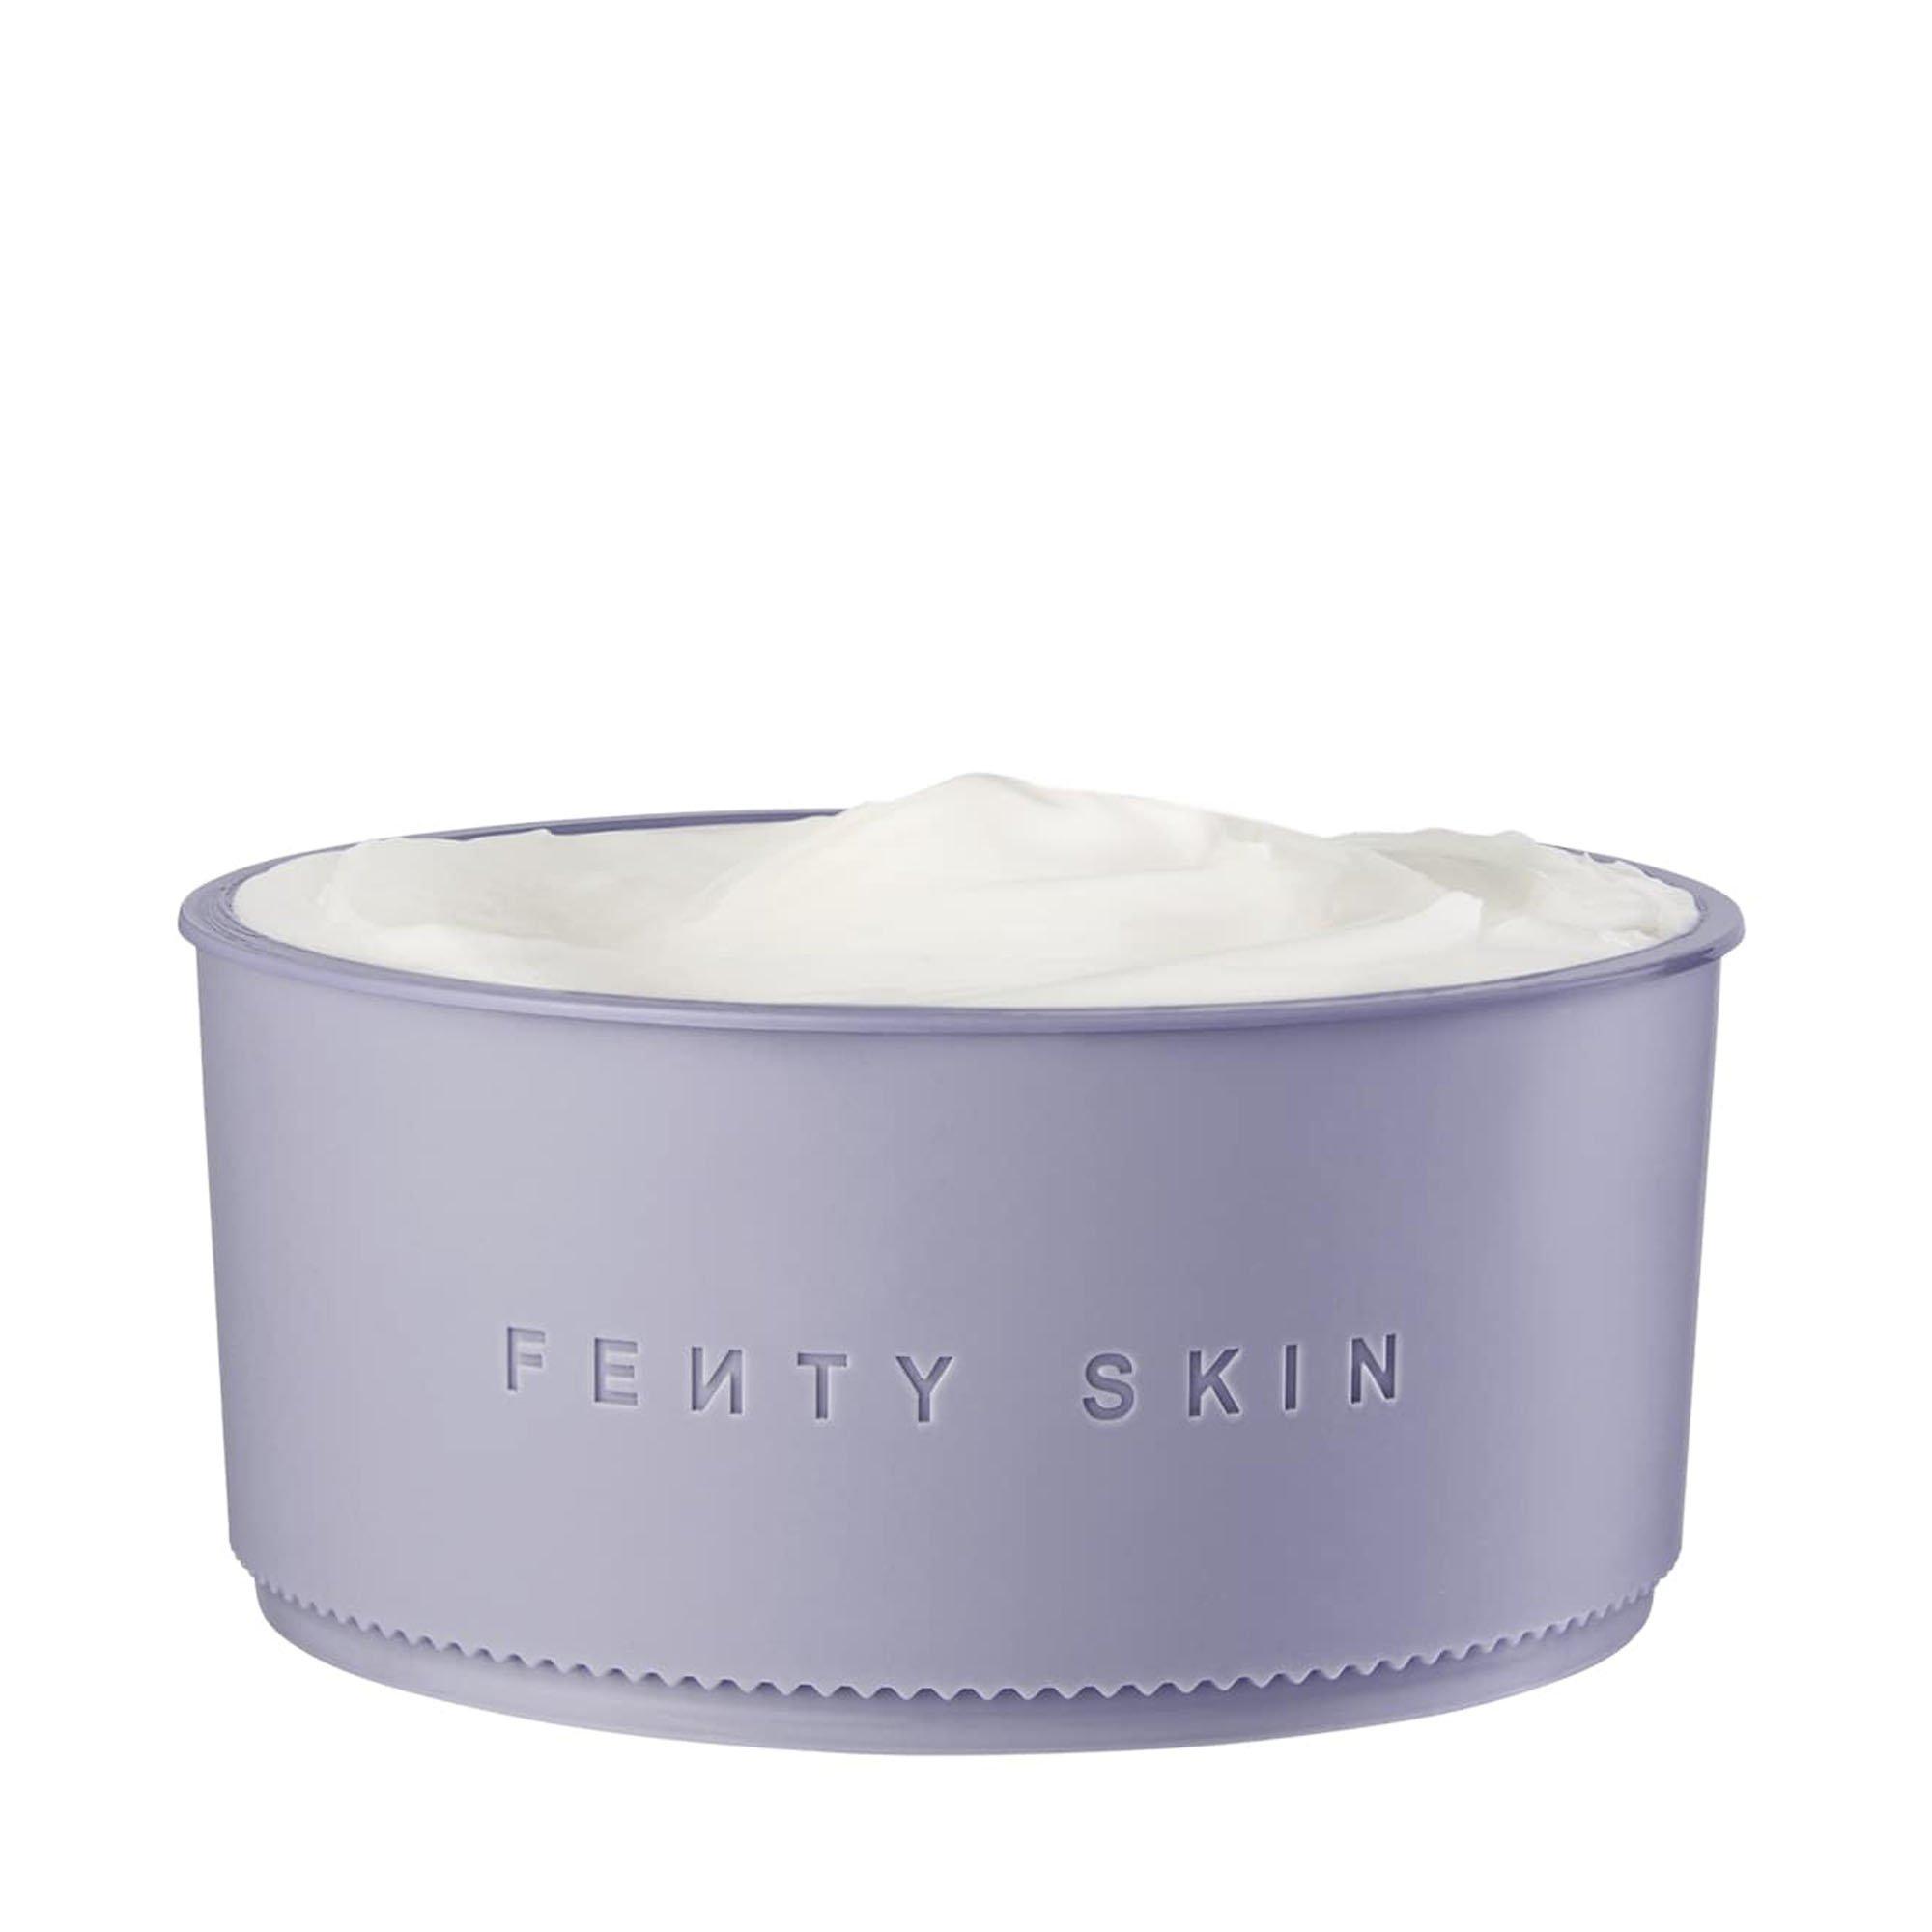 Image of FENTY SKIN Butta Drop Body Cream Refill - 200ml Refill